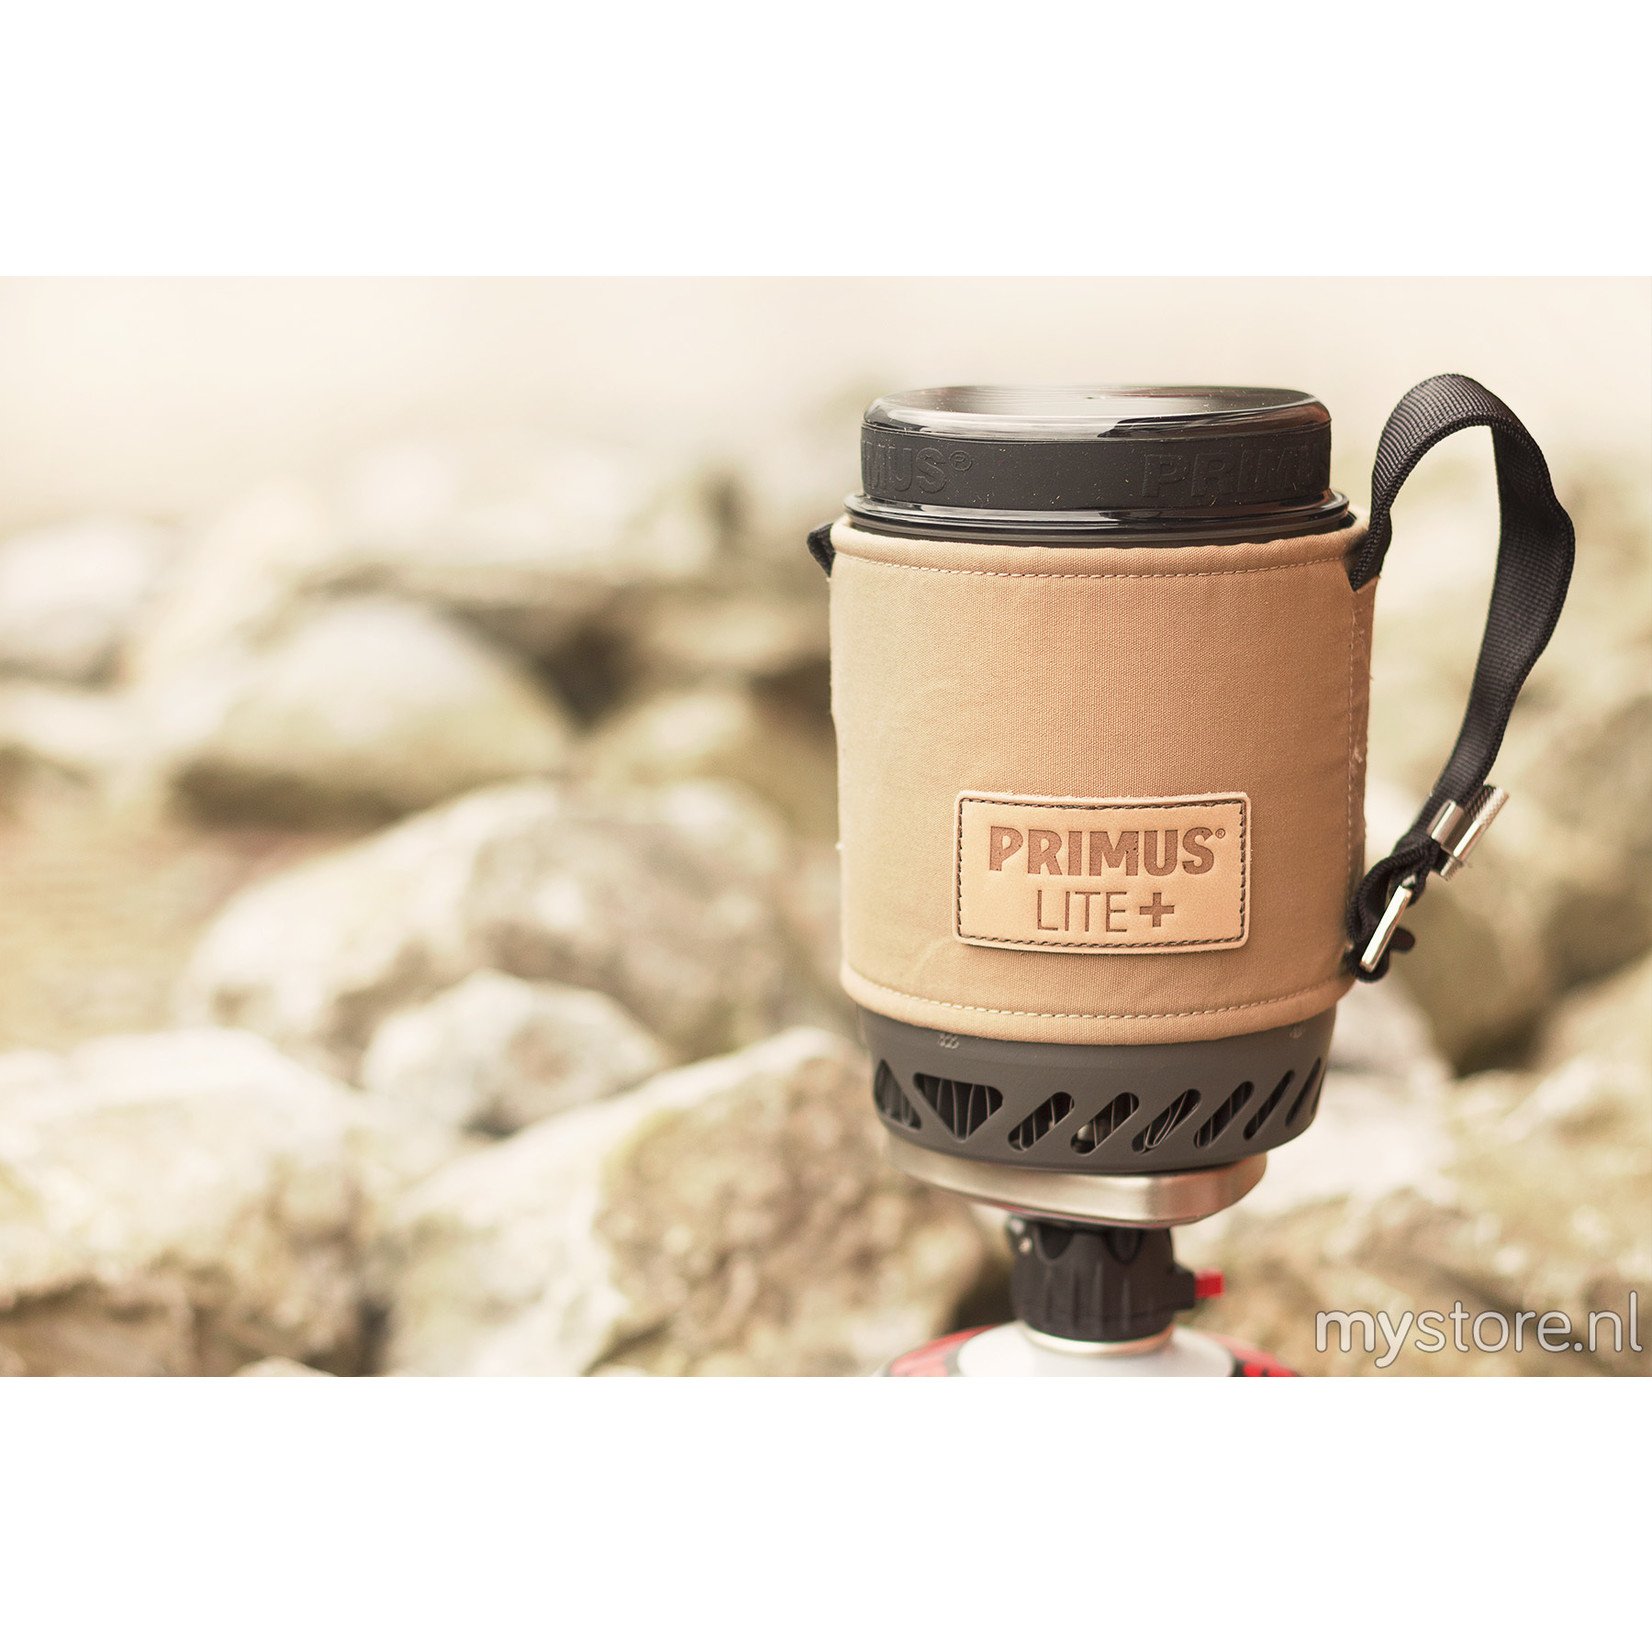 Primus Primus Lite+ stove sand, hitte bestendige hoes